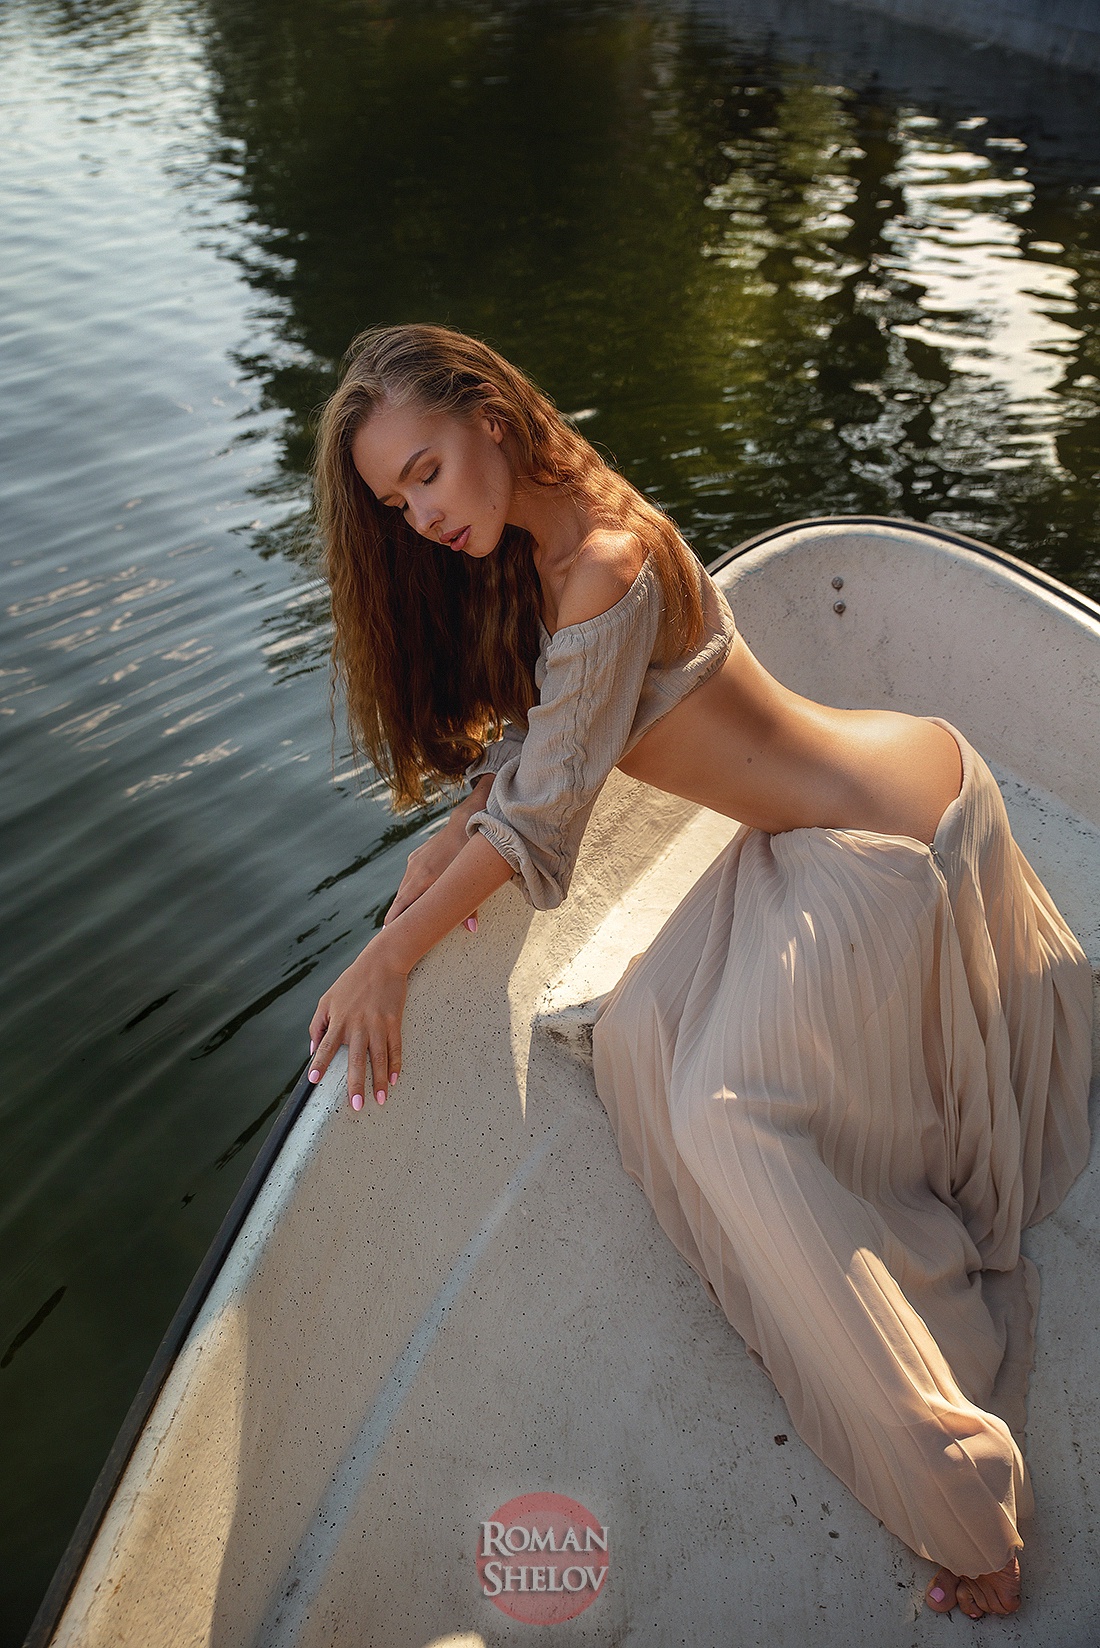 Roman Shelov Women Brunette Brown Clothing Barefoot Boat Water Lake 1100x1648